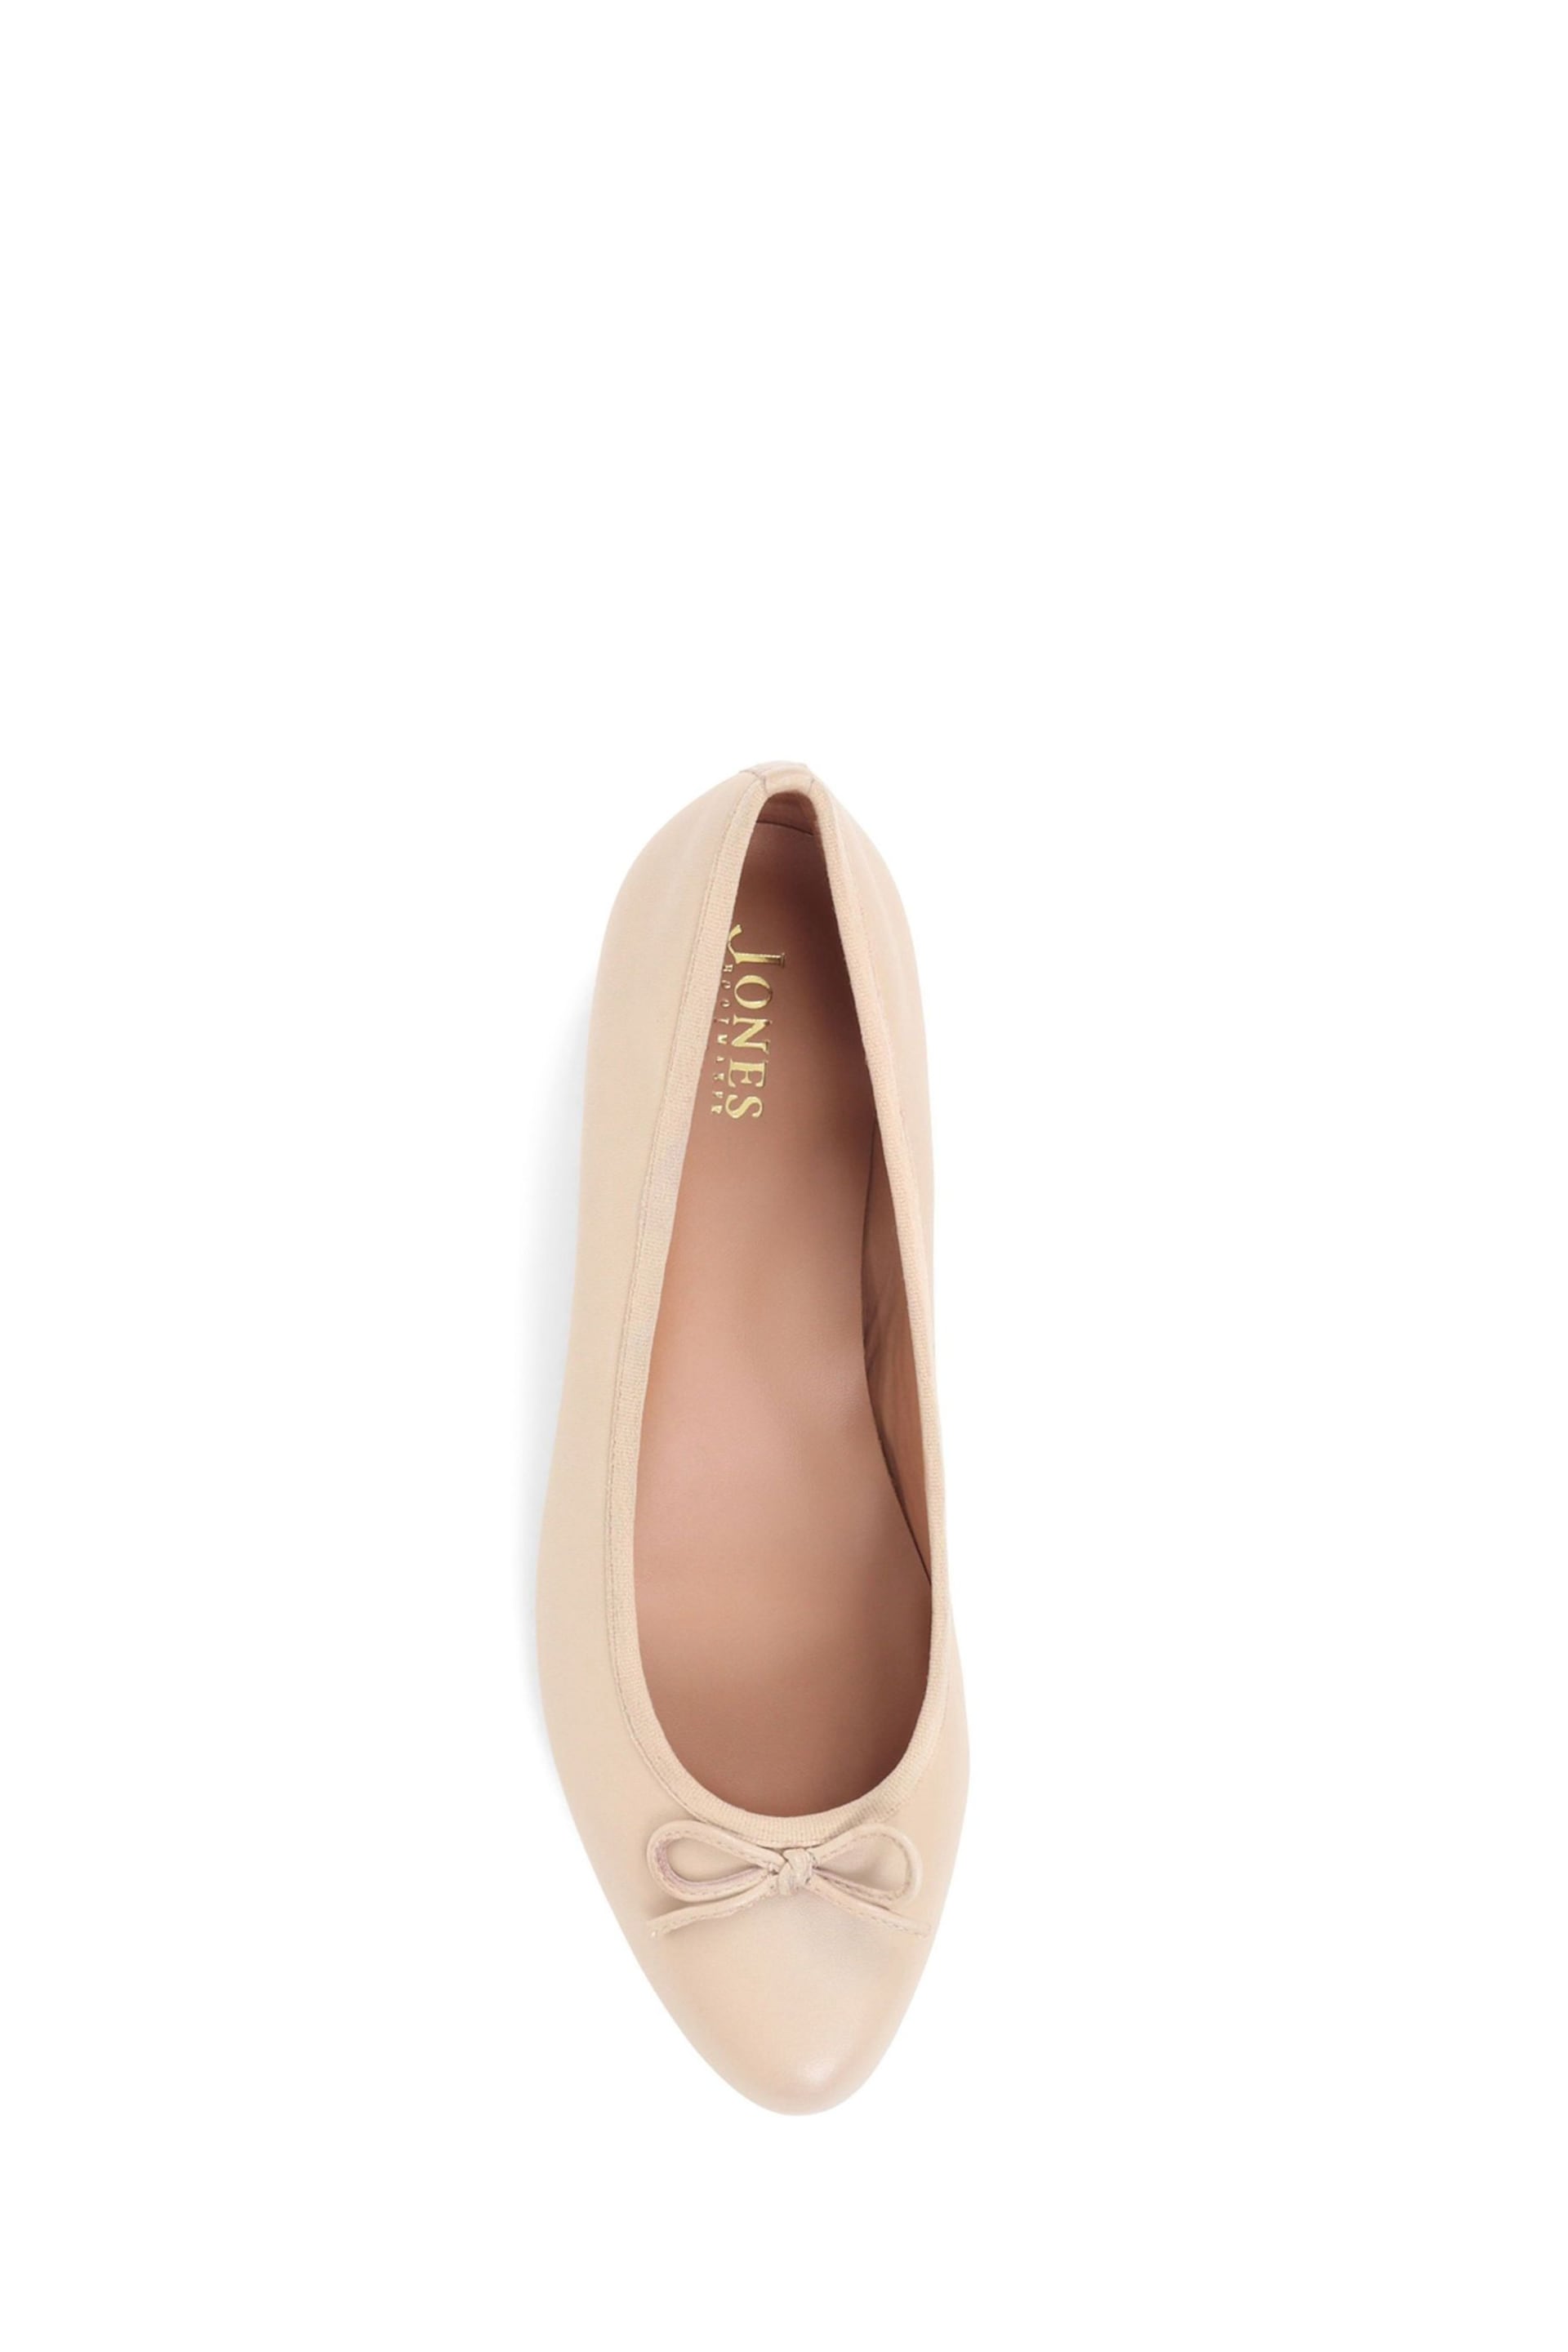 Jones Bootmaker Cream Soleil Leather Low Ballet Shoes - Image 5 of 6